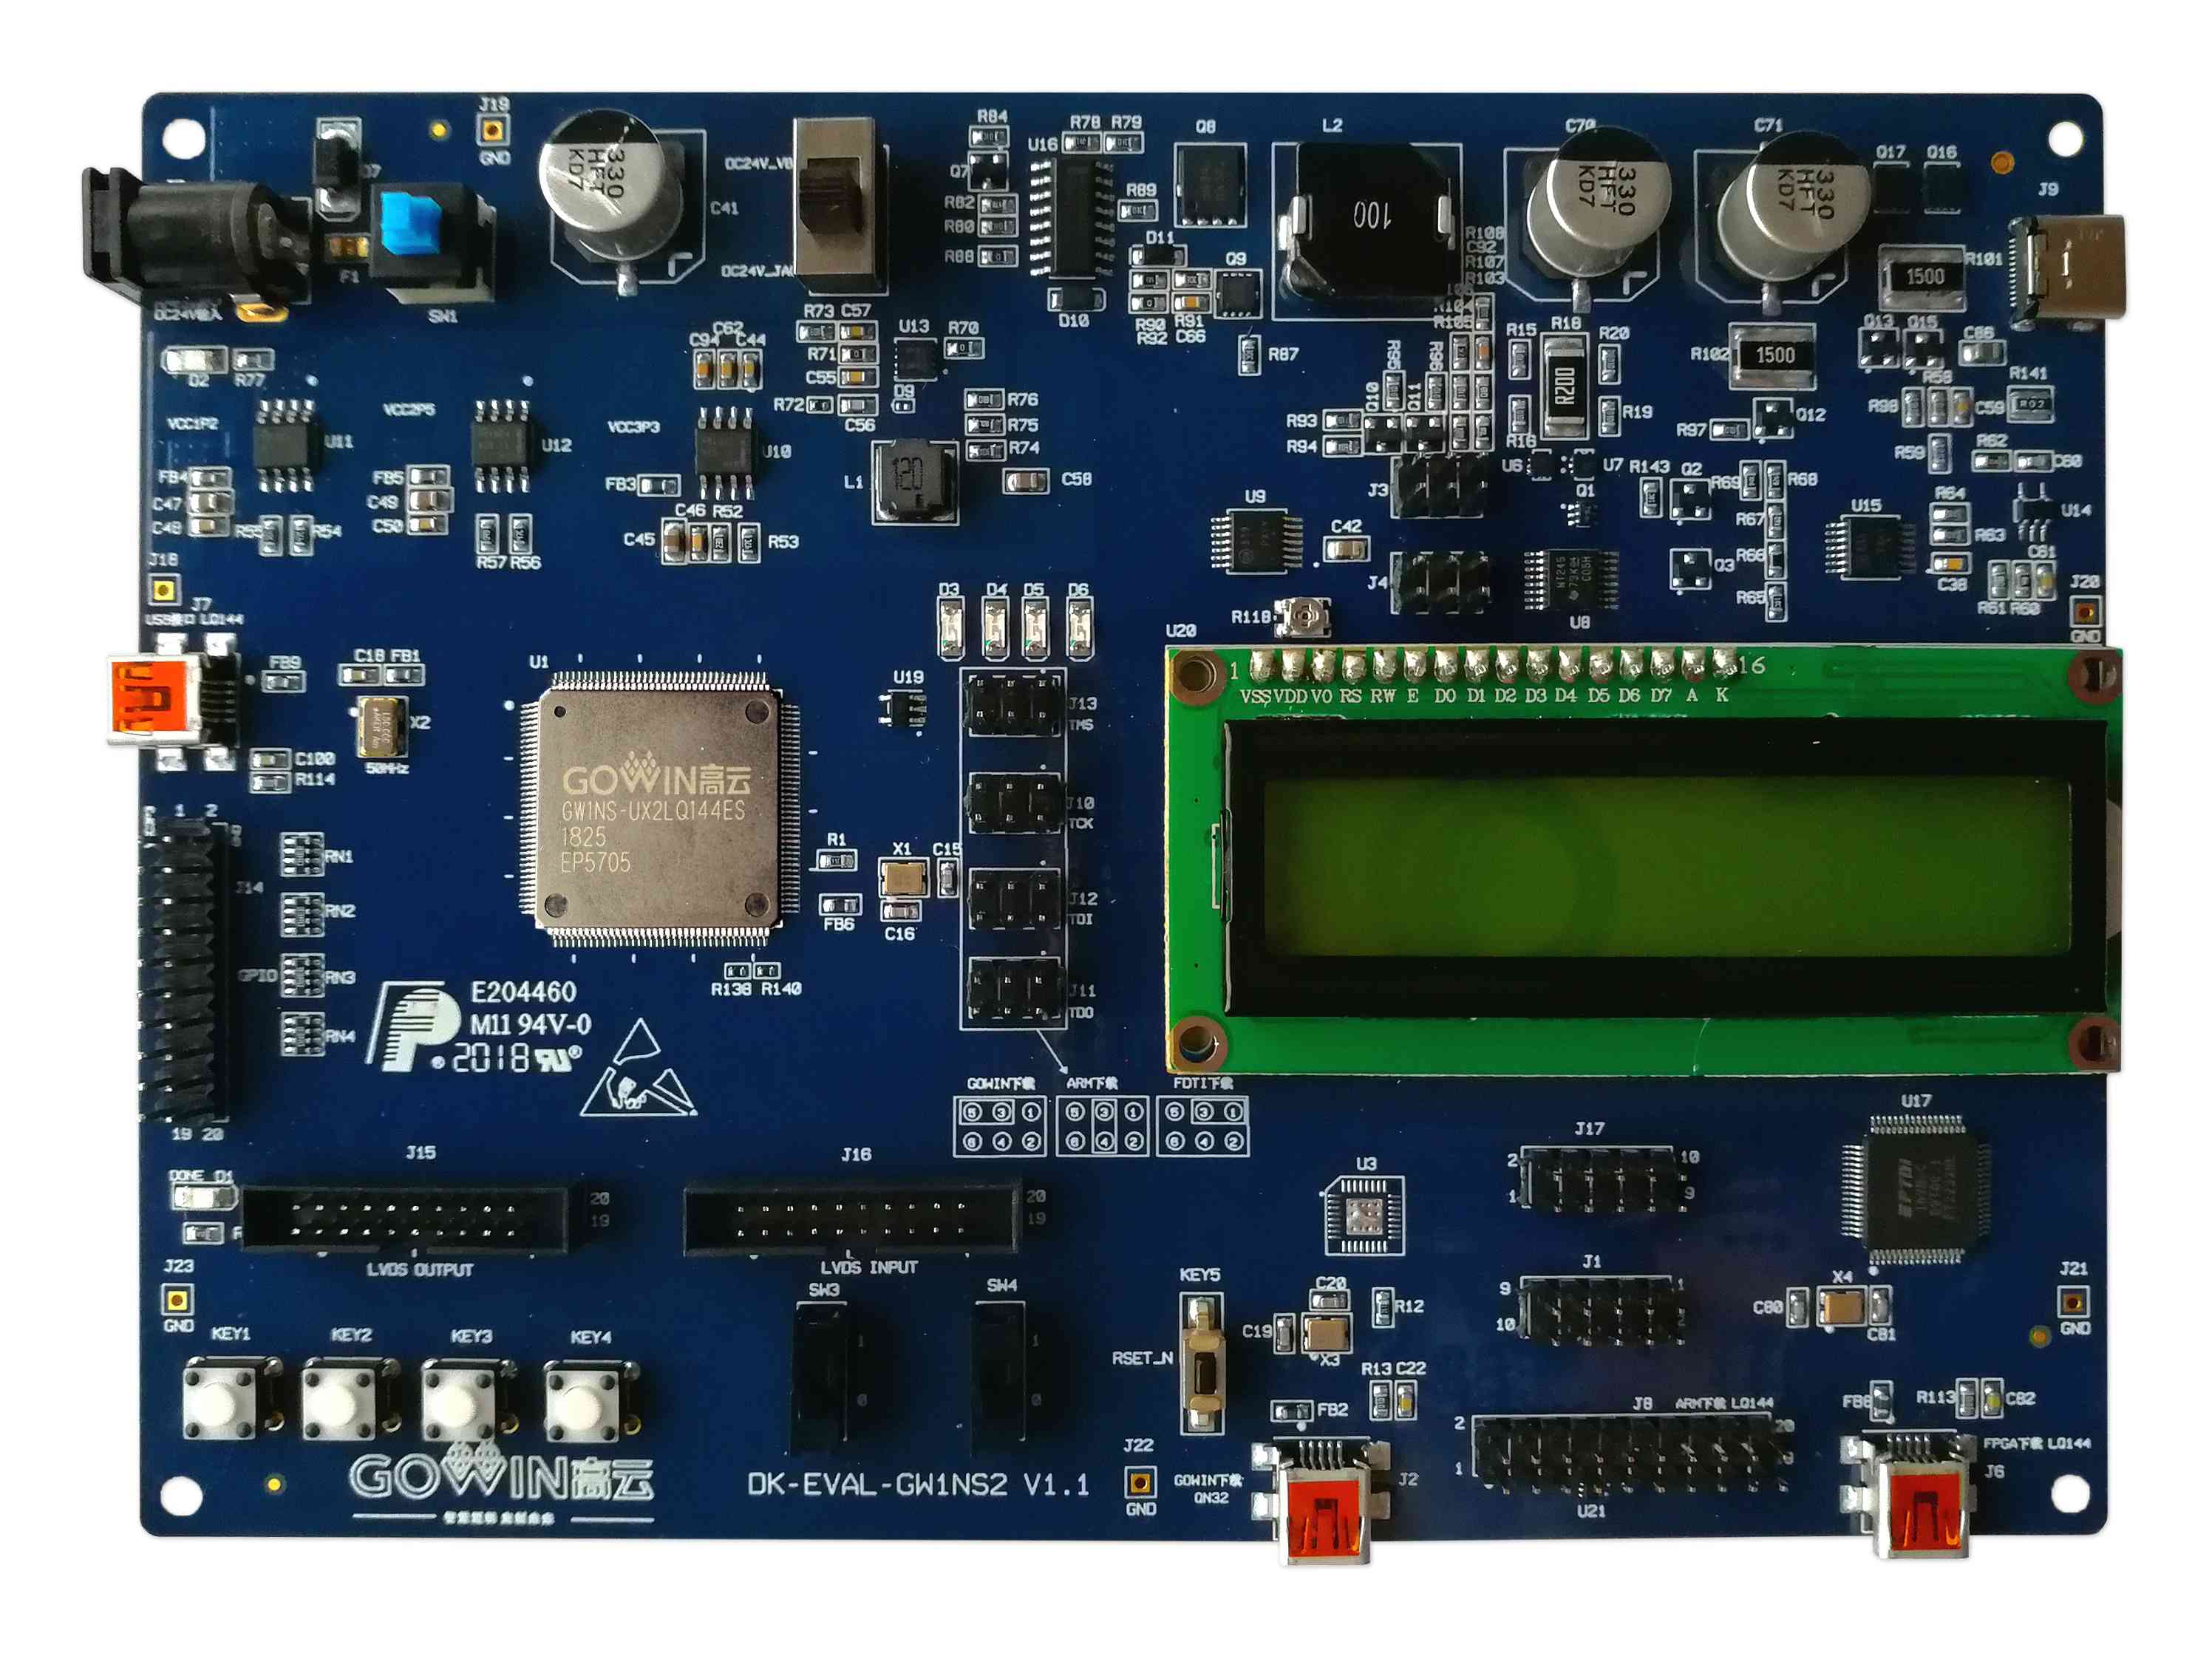 2138cn太阳集团半导体小蜜蜂家族GW1NS系列GW1NS-2 FPGA-SoC芯片开始提供工程样片及开发板，迈出布局AI第一步